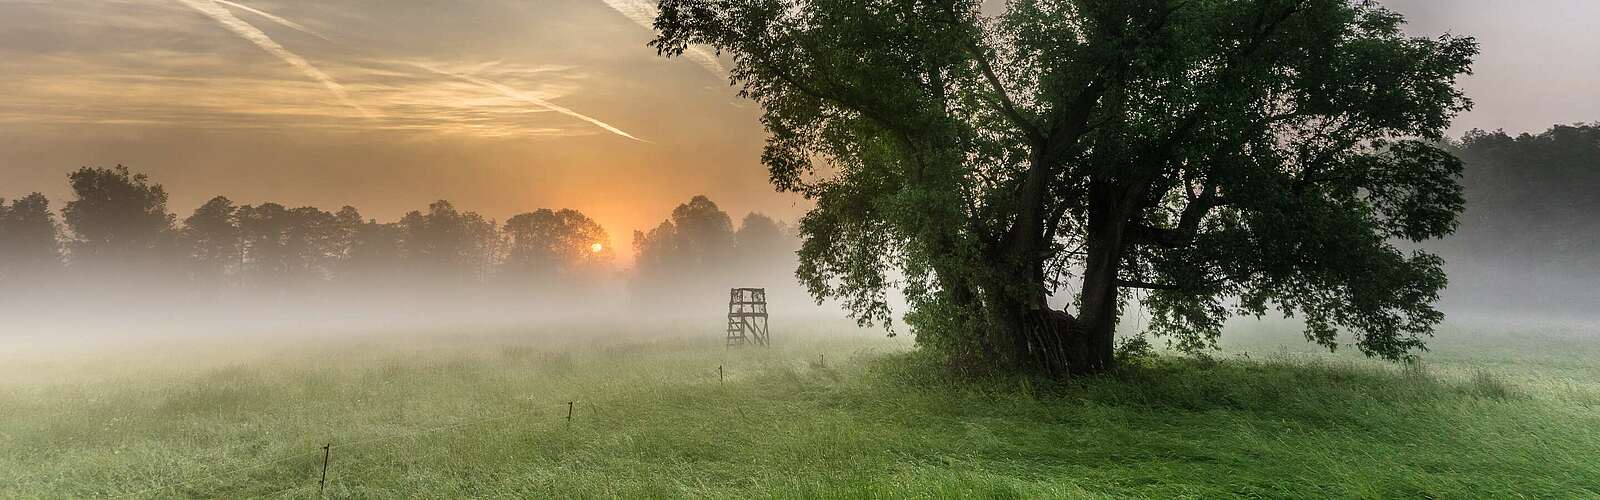 Morgentau auf den Spreewaldwiesen,
        
    

        Foto: TMB-Fotoarchiv/Alois Eckl